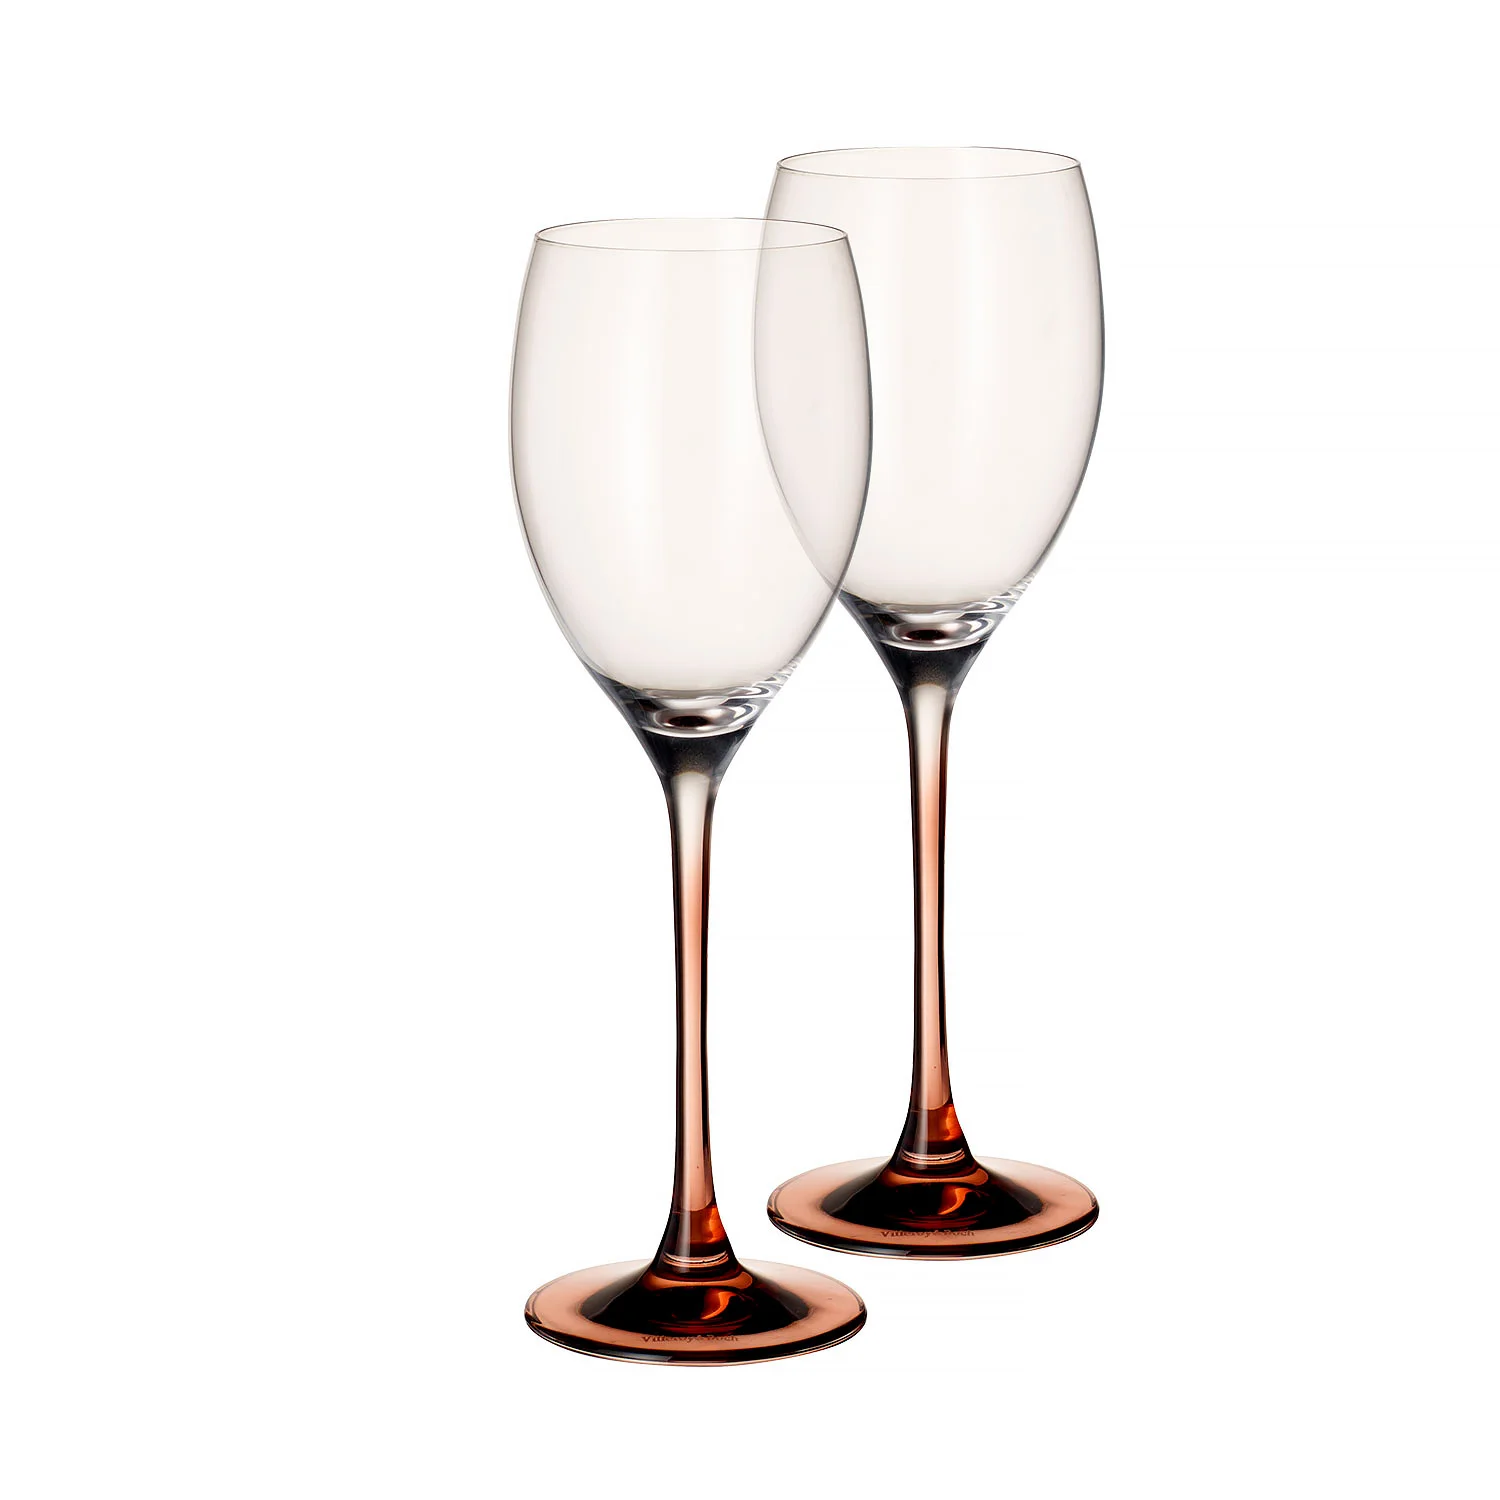 Manufacture Glass Набор бокалов для белого вина 370 мл, 2 шт.